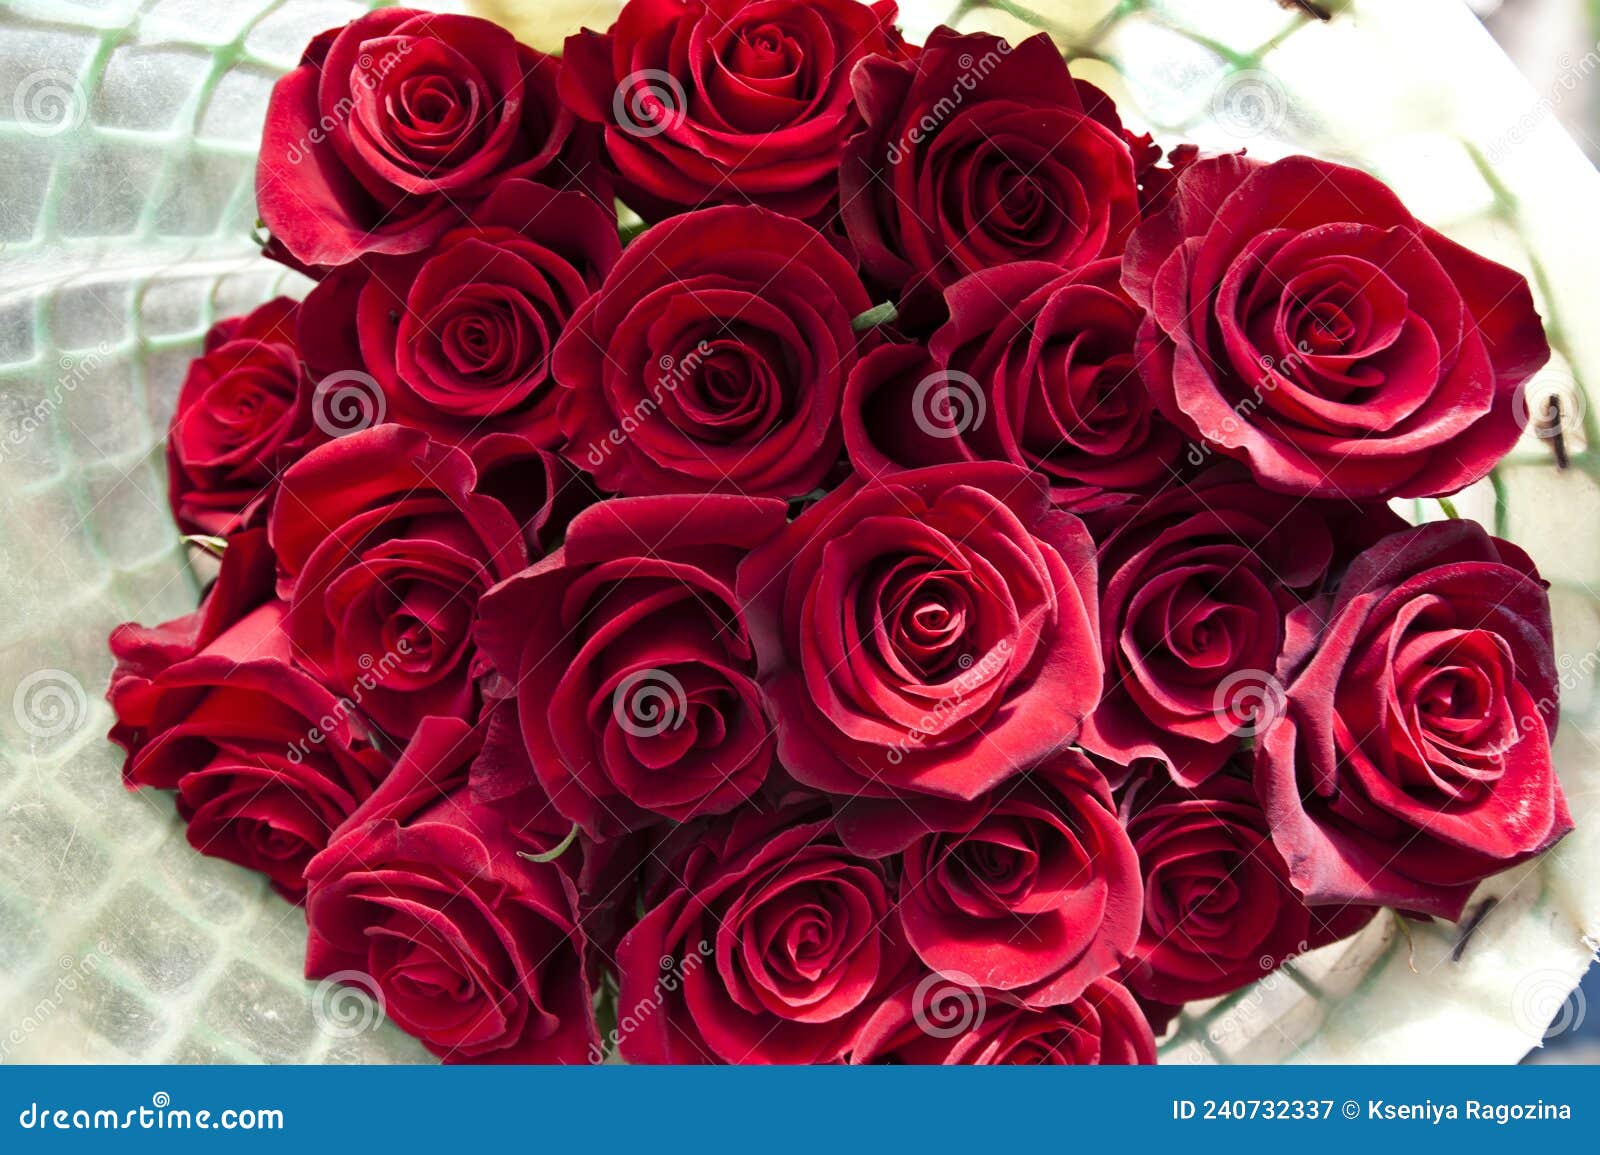 181 Ecuador Roses Stock Photos - Free & Royalty-Free Stock Photos from  Dreamstime